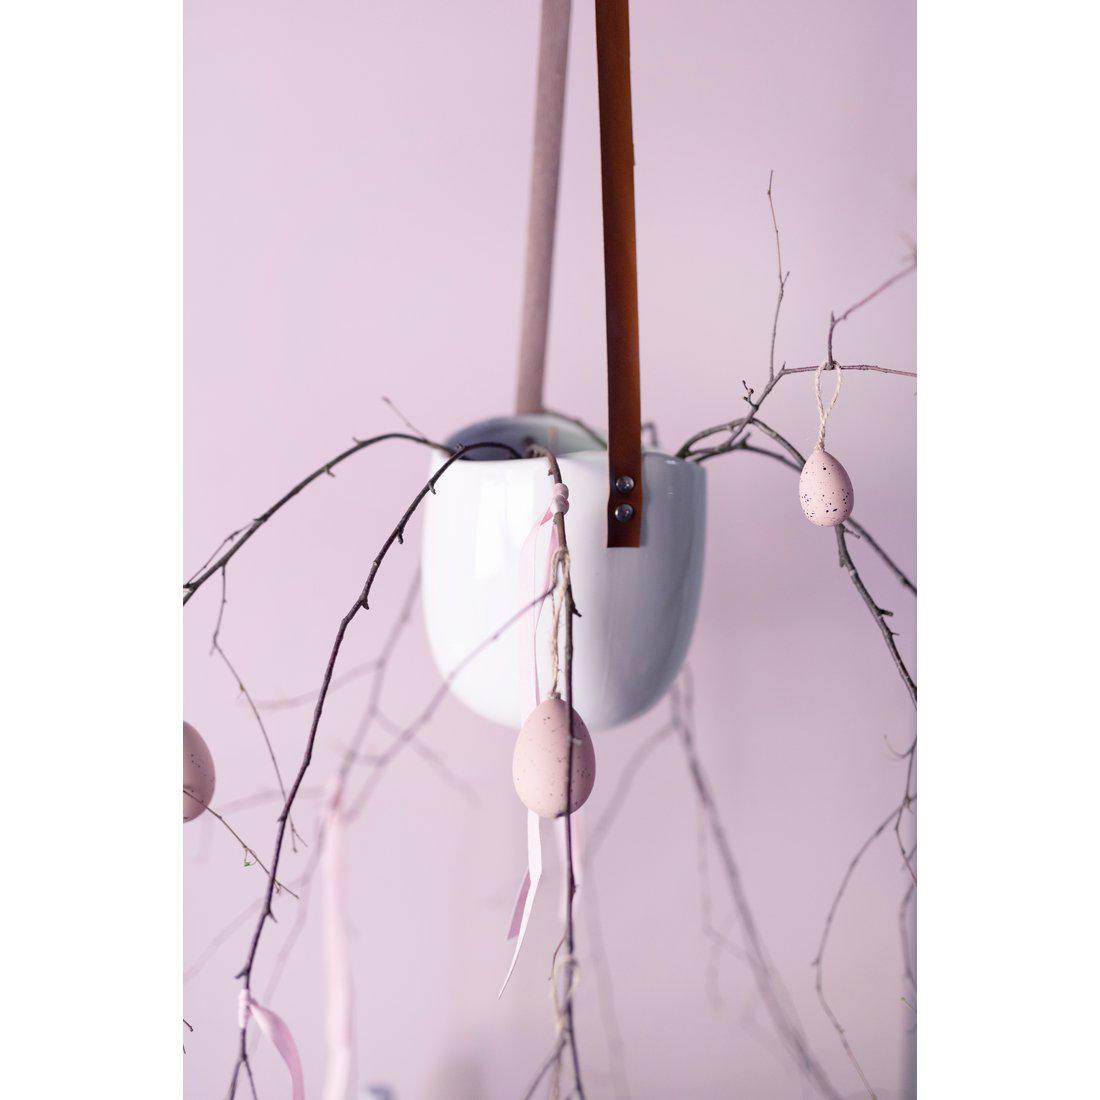 Wikholm Estrid Ceramic Hanging PLant Pot, Gloss White